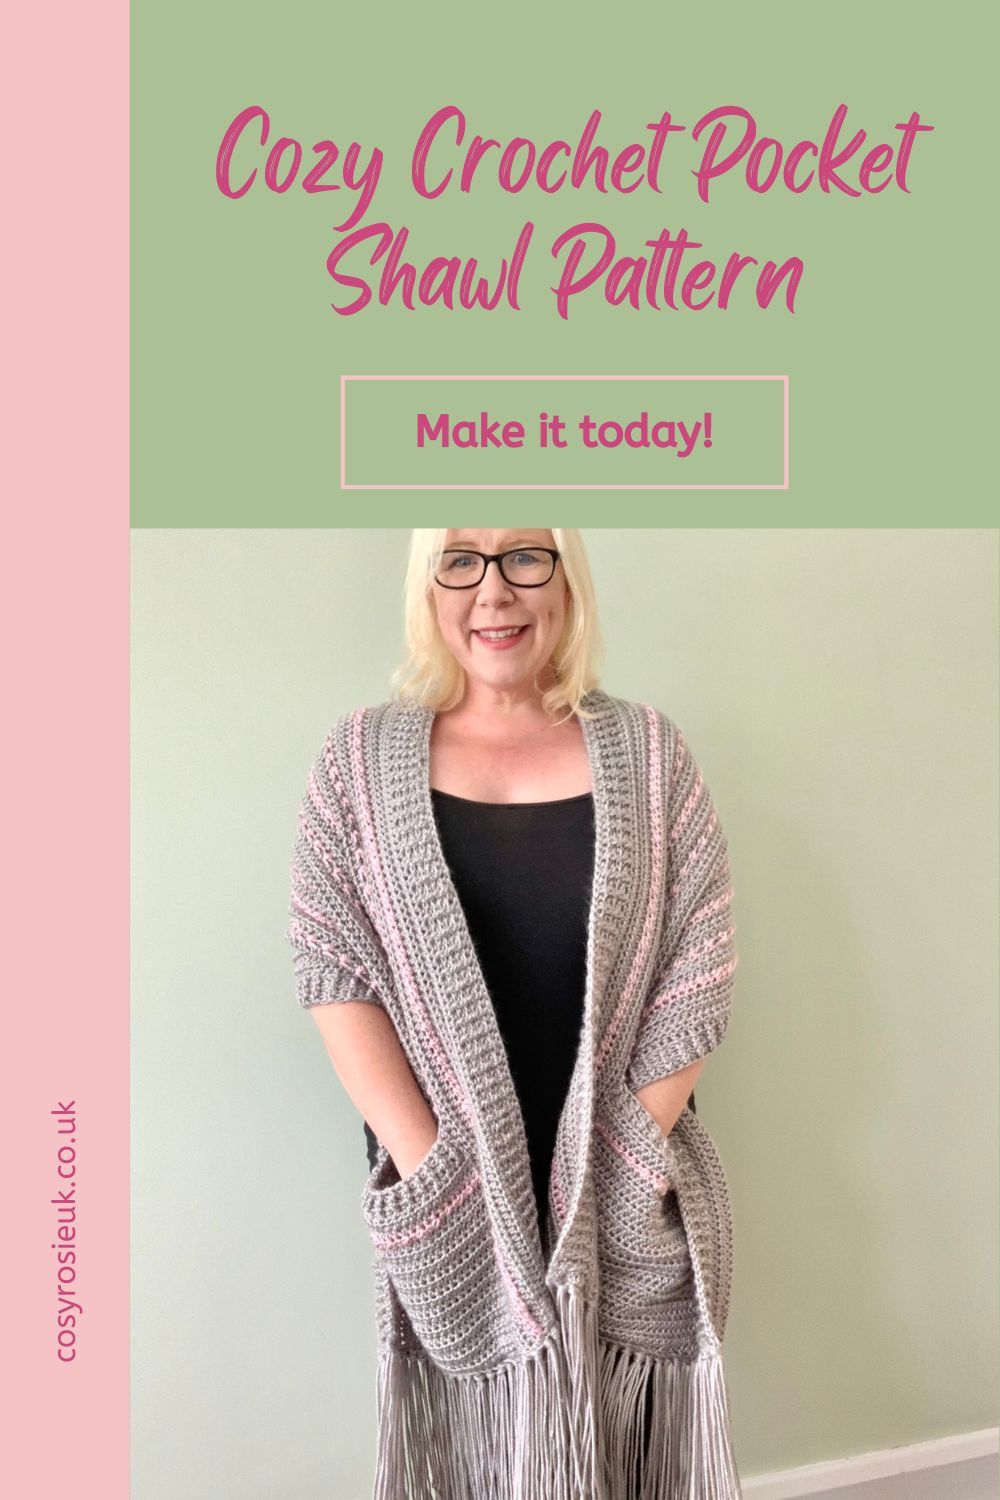 Crochet Pocket Shawl Pattern